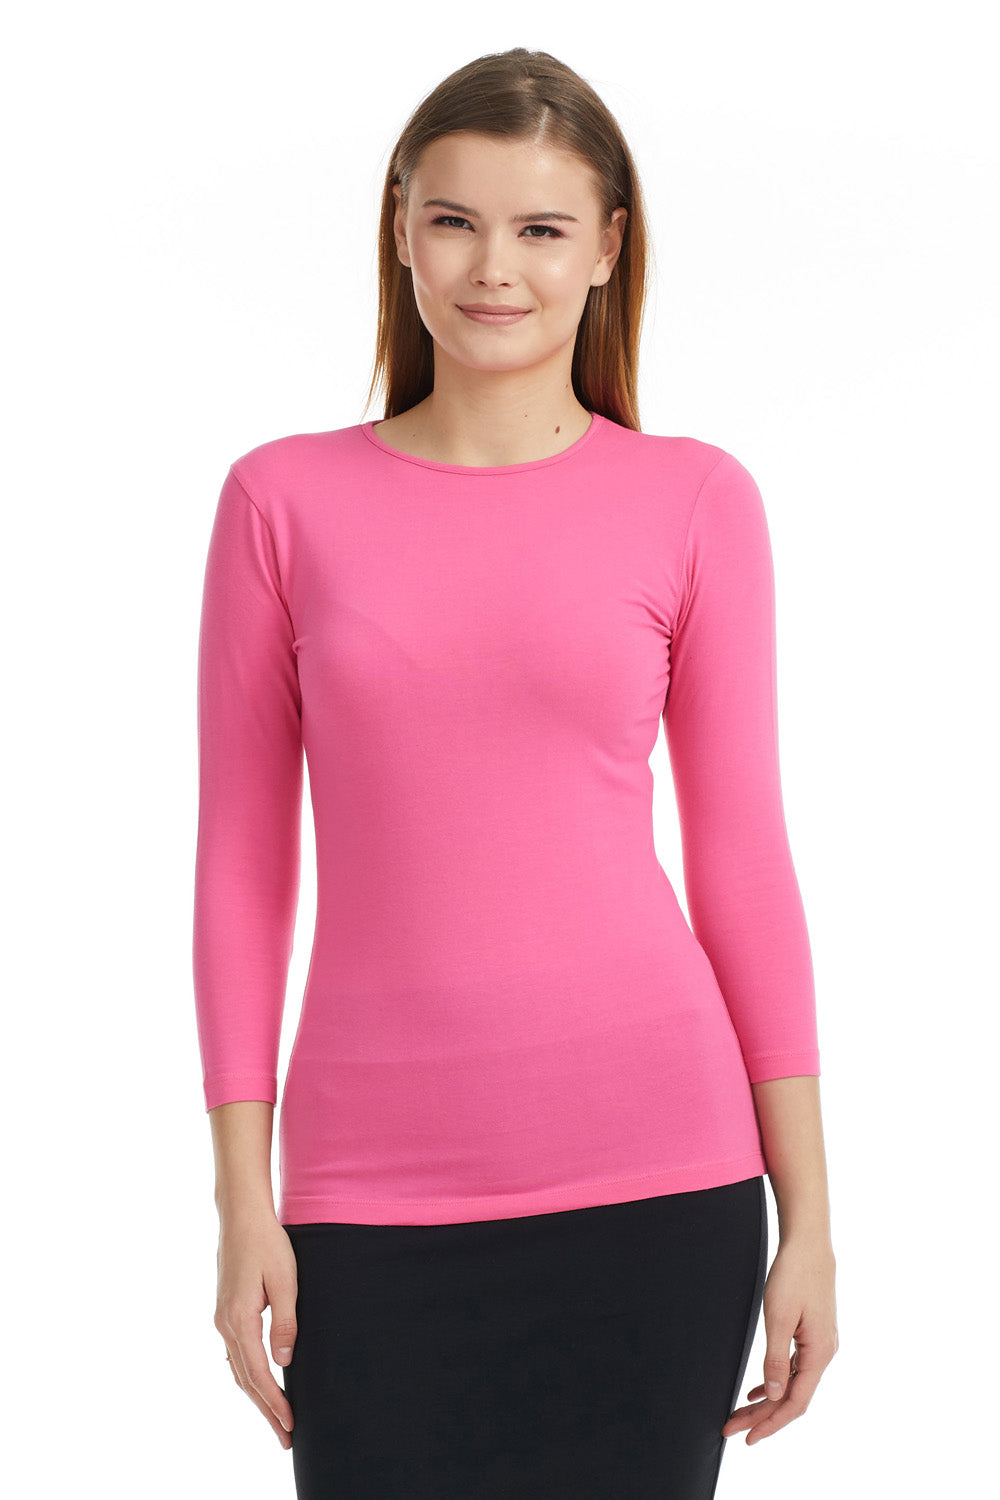 hot pink high crew neck 3/4 sleeve modest layering shirt